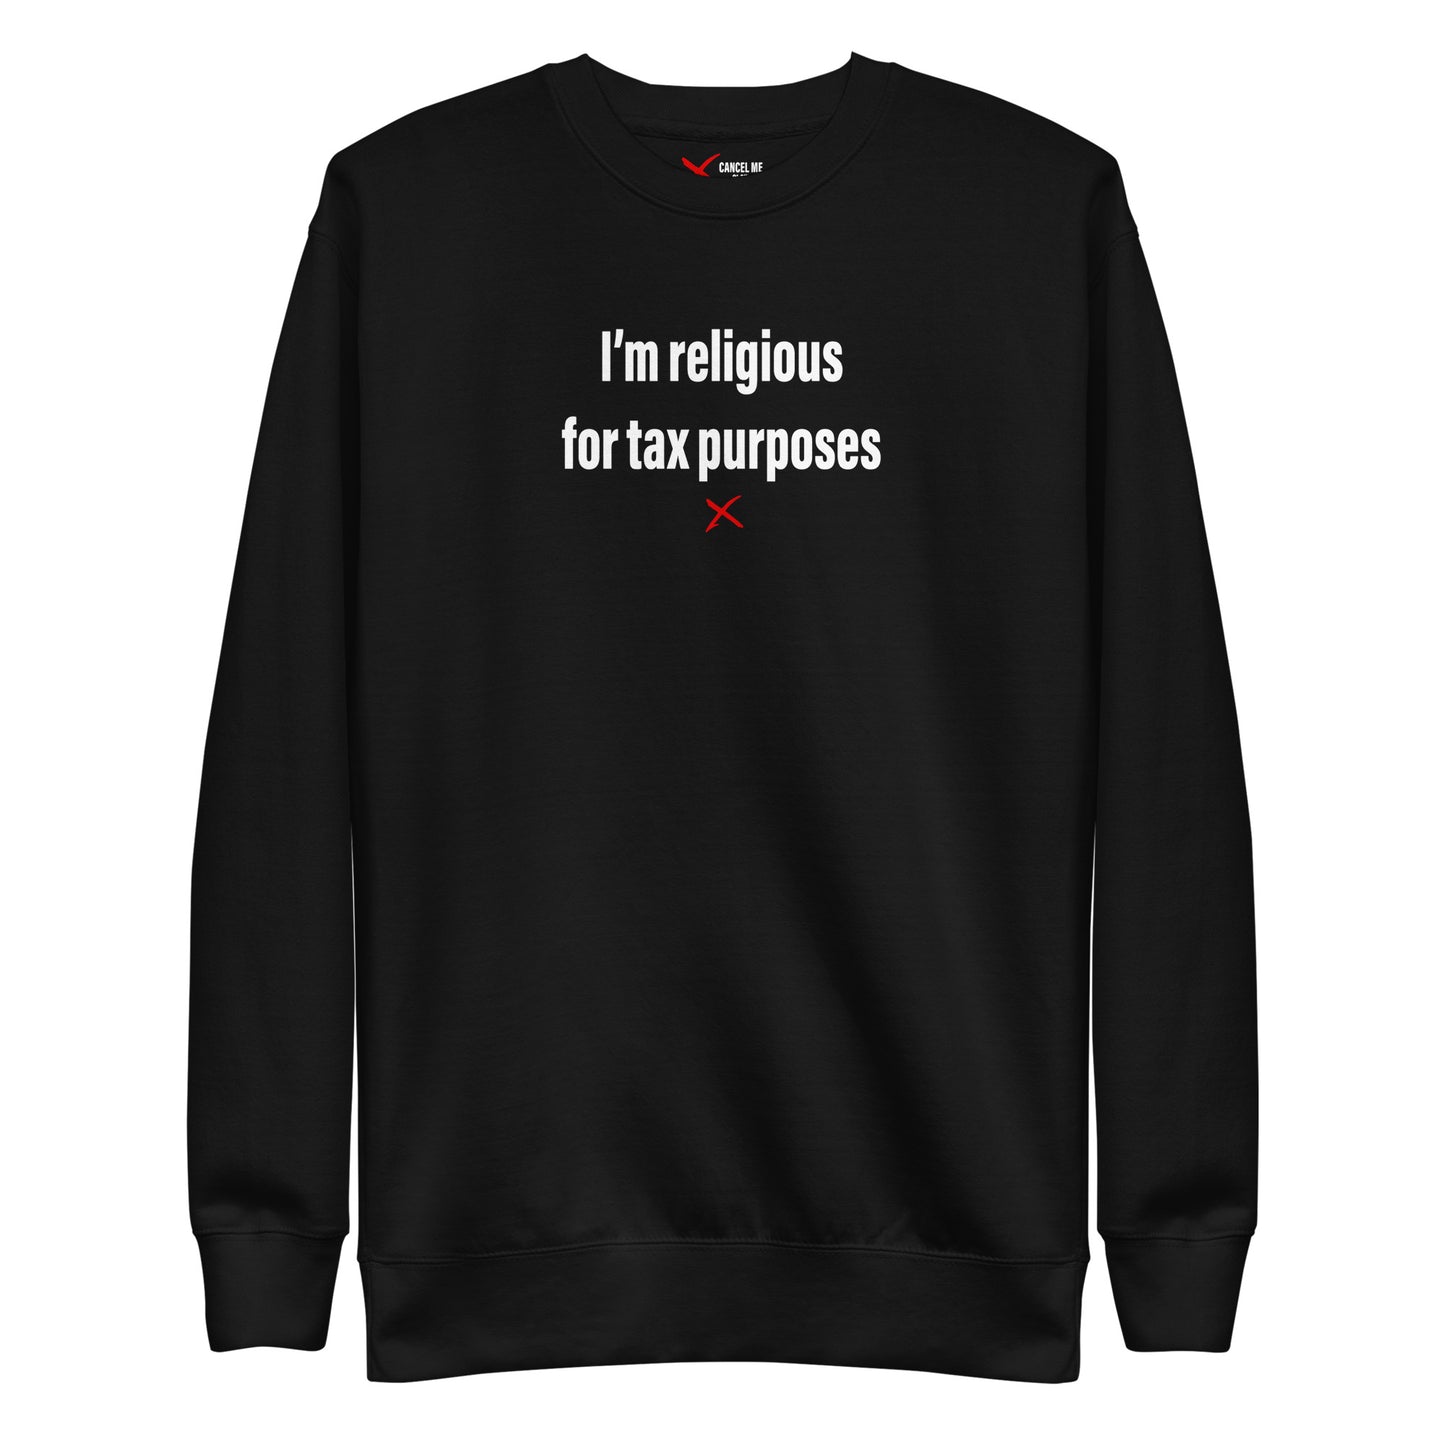 I'm religious for tax purposes - Sweatshirt